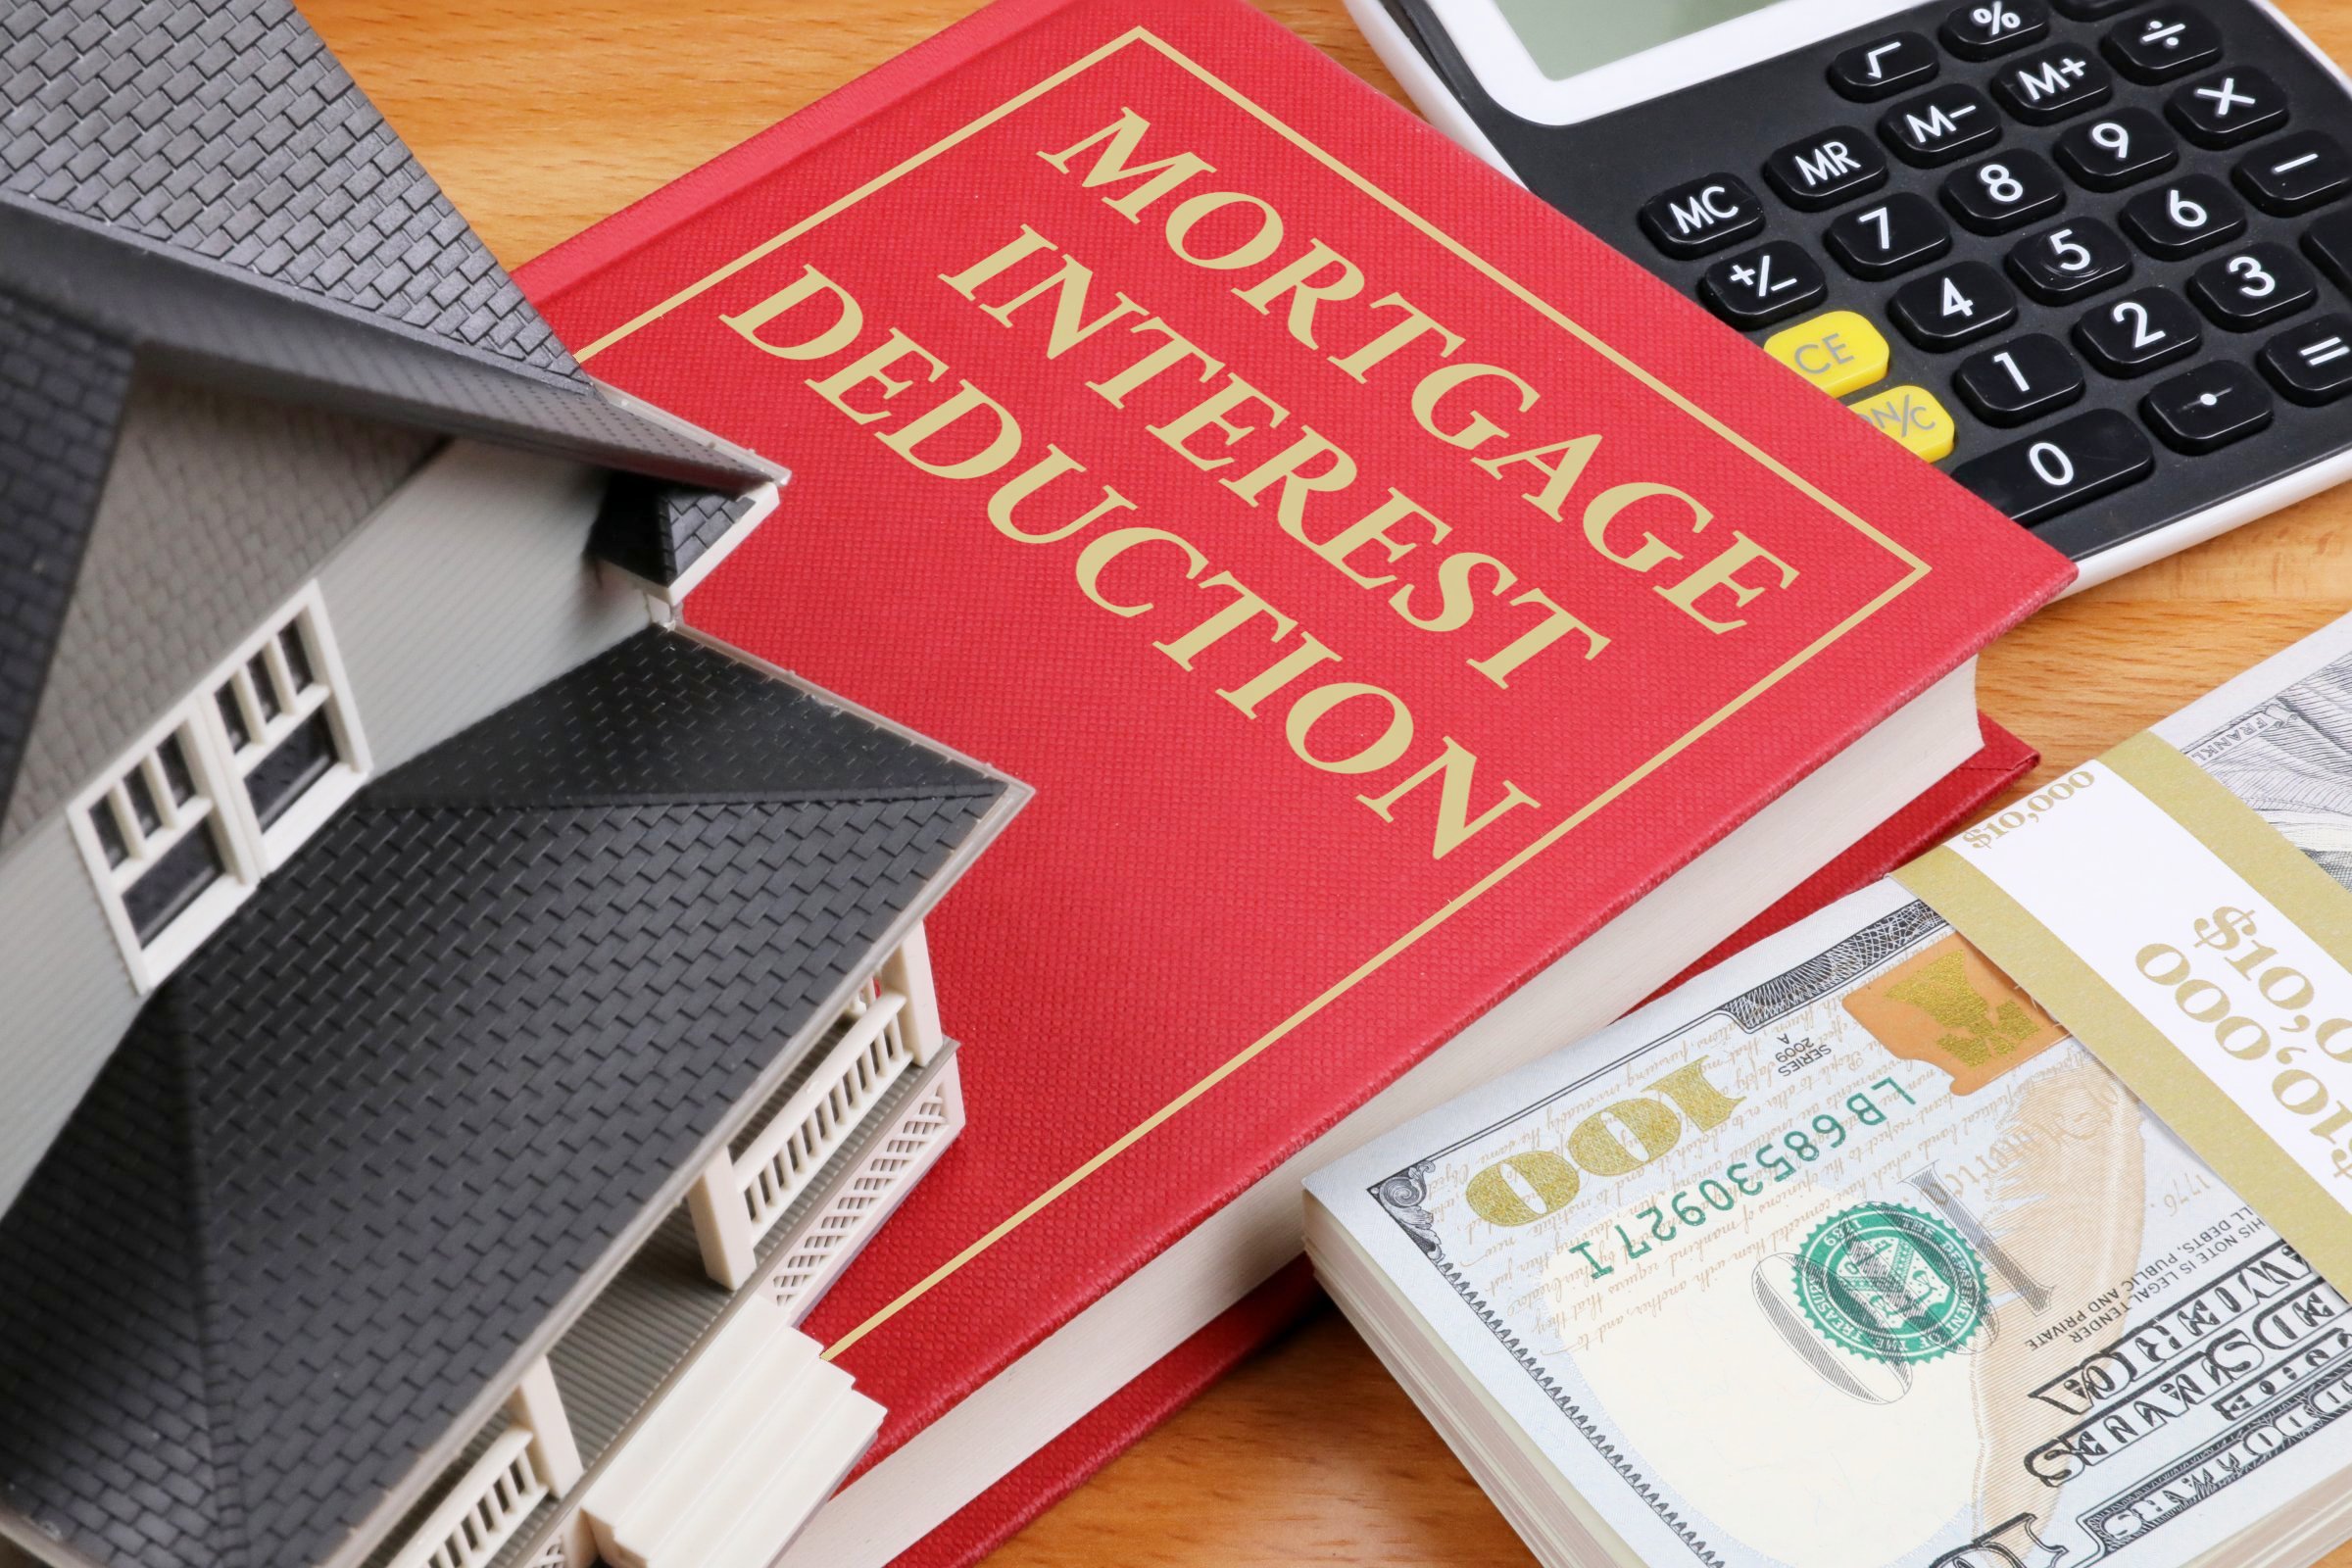 mortgage interest deduction